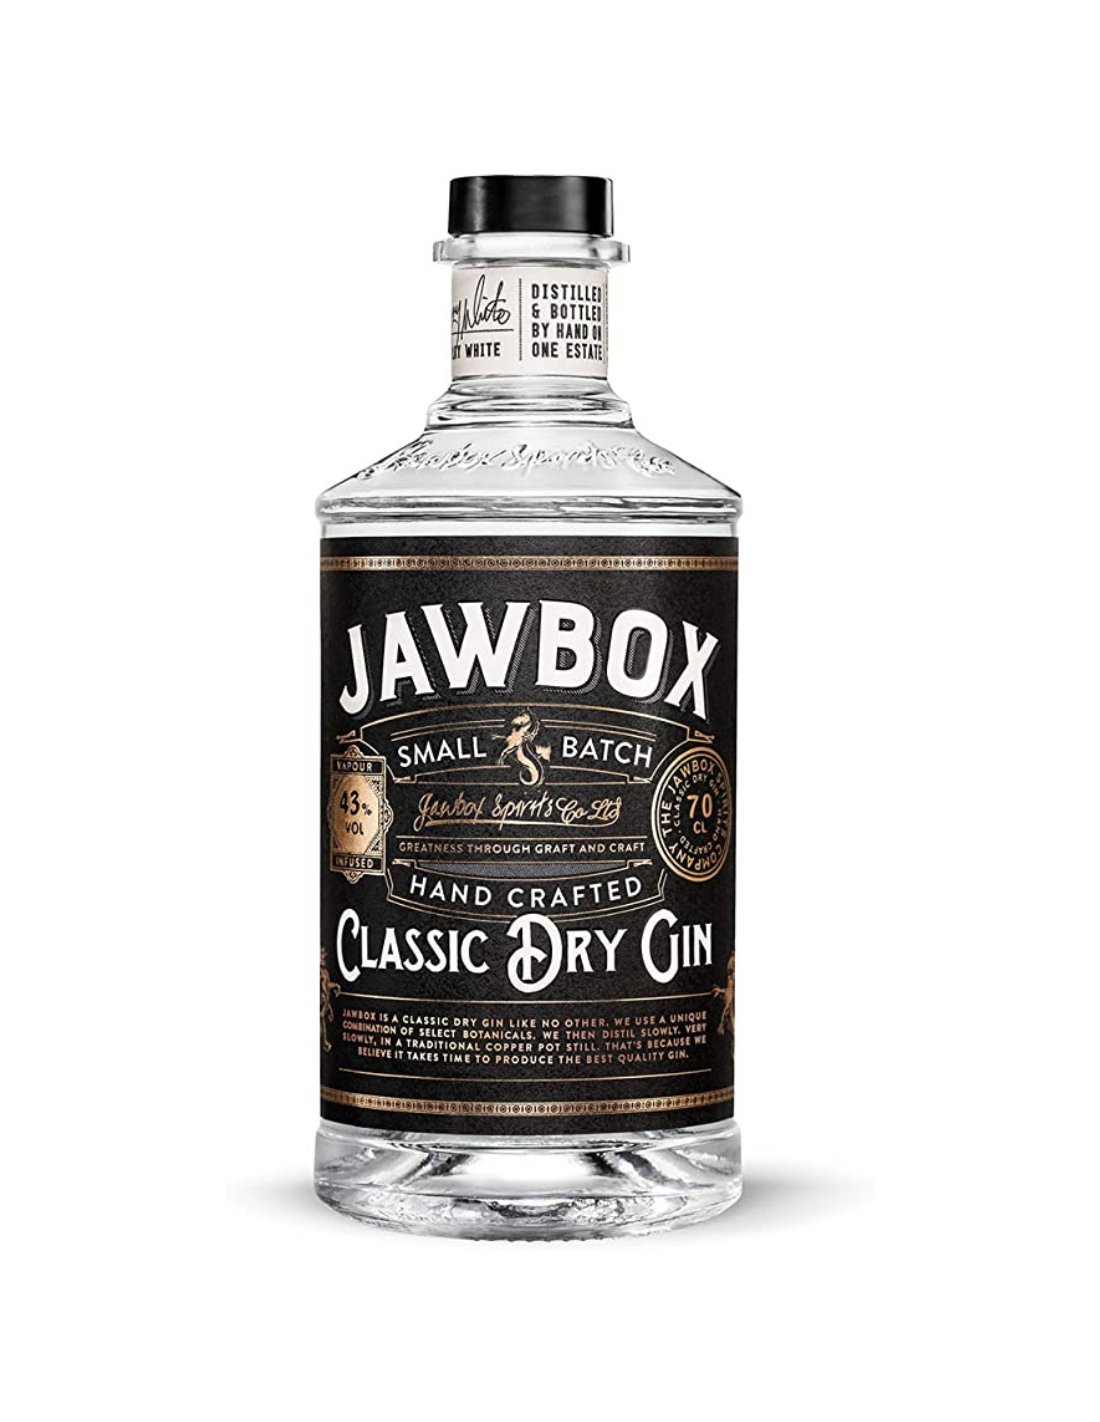 Gin Jawbox Small Batch Classic Dry, 43% alc., 0.7L, Irlanda alcooldiscount.ro